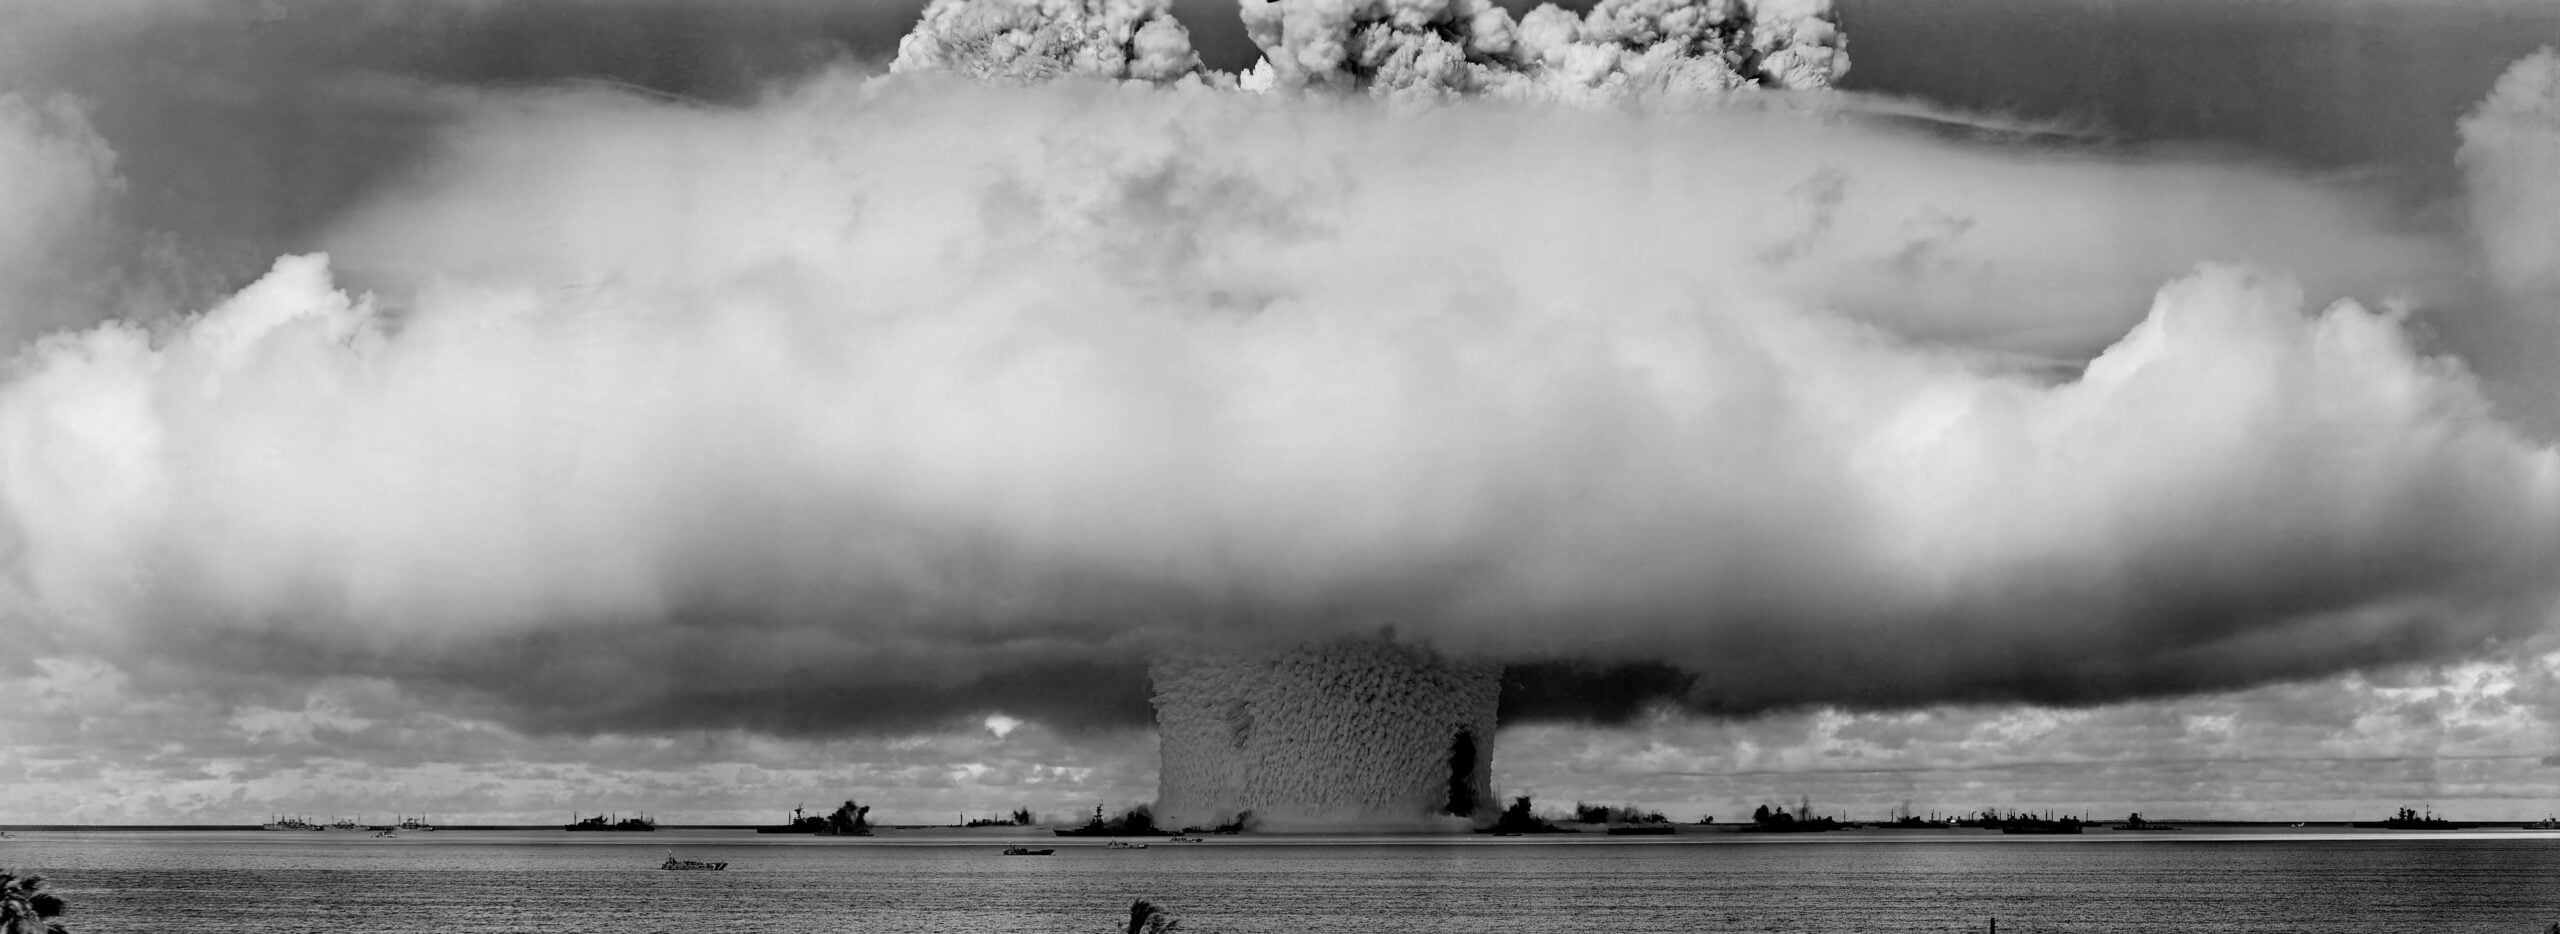 Clouds-Atomic-Blast